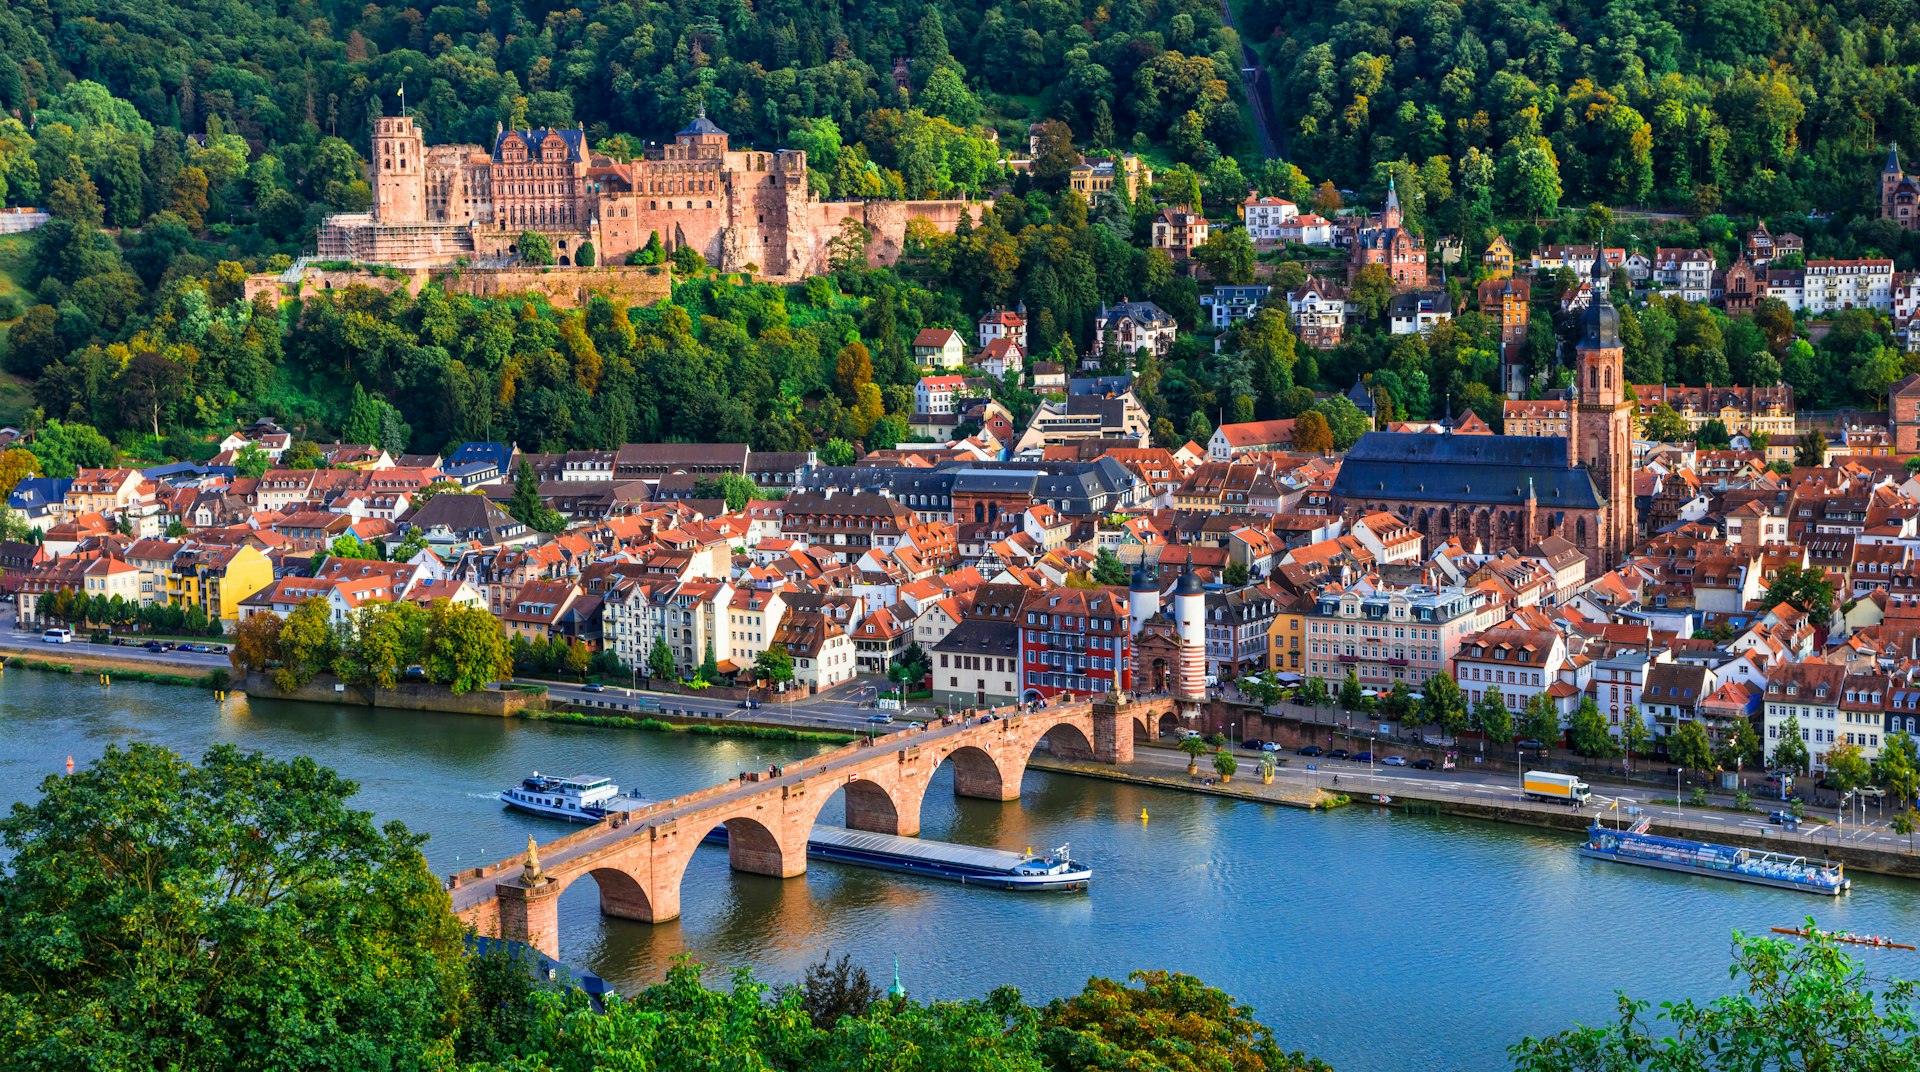 High-angle view of Heidelberg, Germany